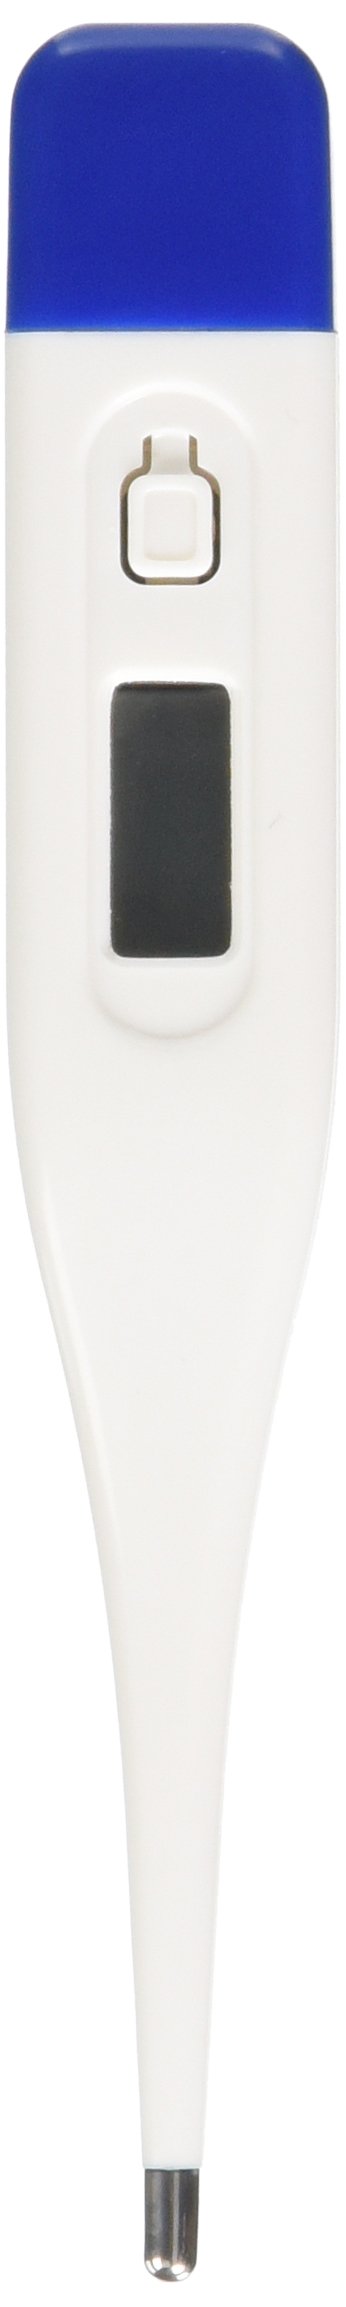 [Australia] - ADC 413B Compact Digital Stick Thermometer, Oral, Adtemp 